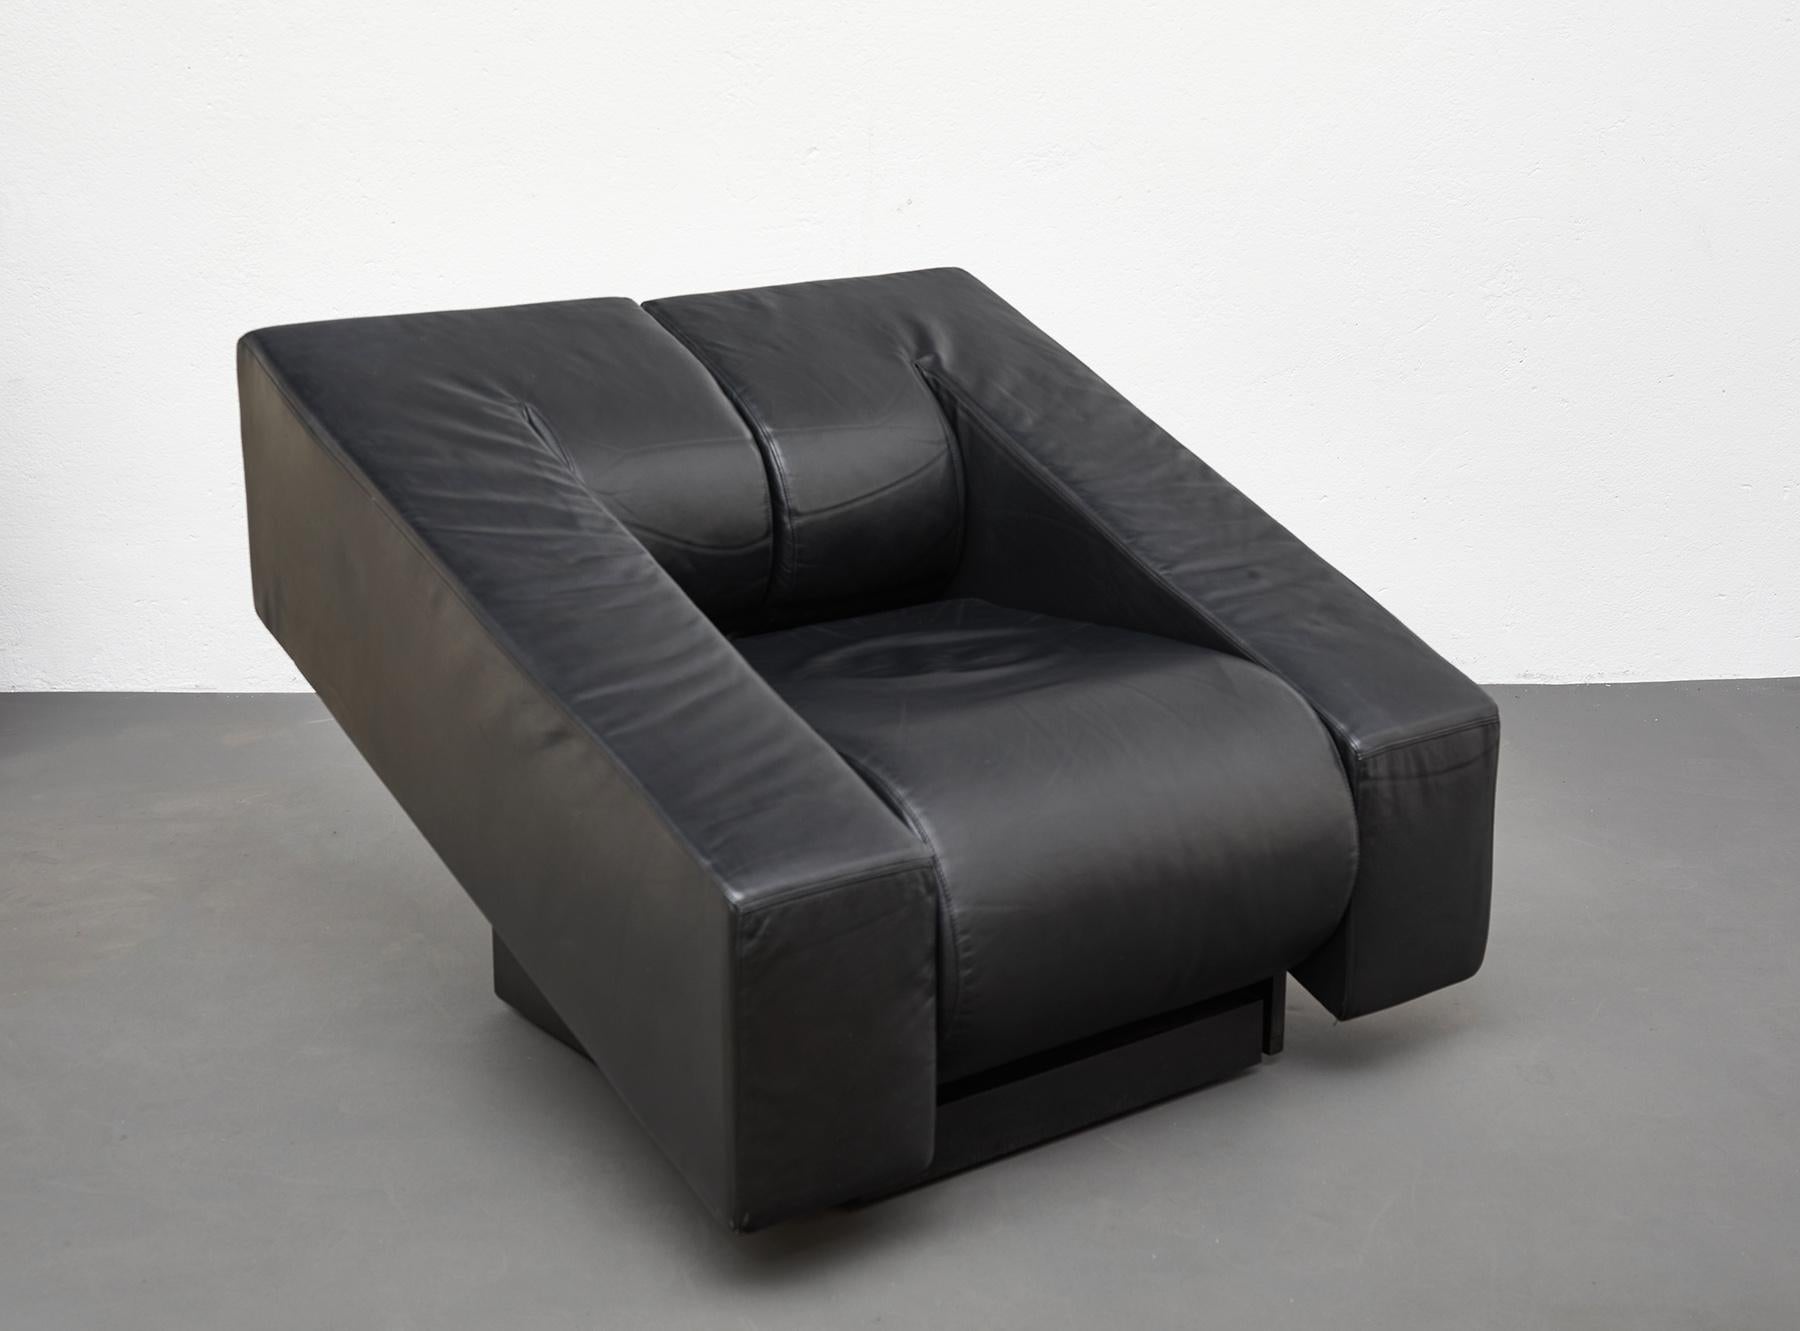 Late 20th Century Obliqua Black Leather Lounge Chair by Mario Botta, Alias, 1987